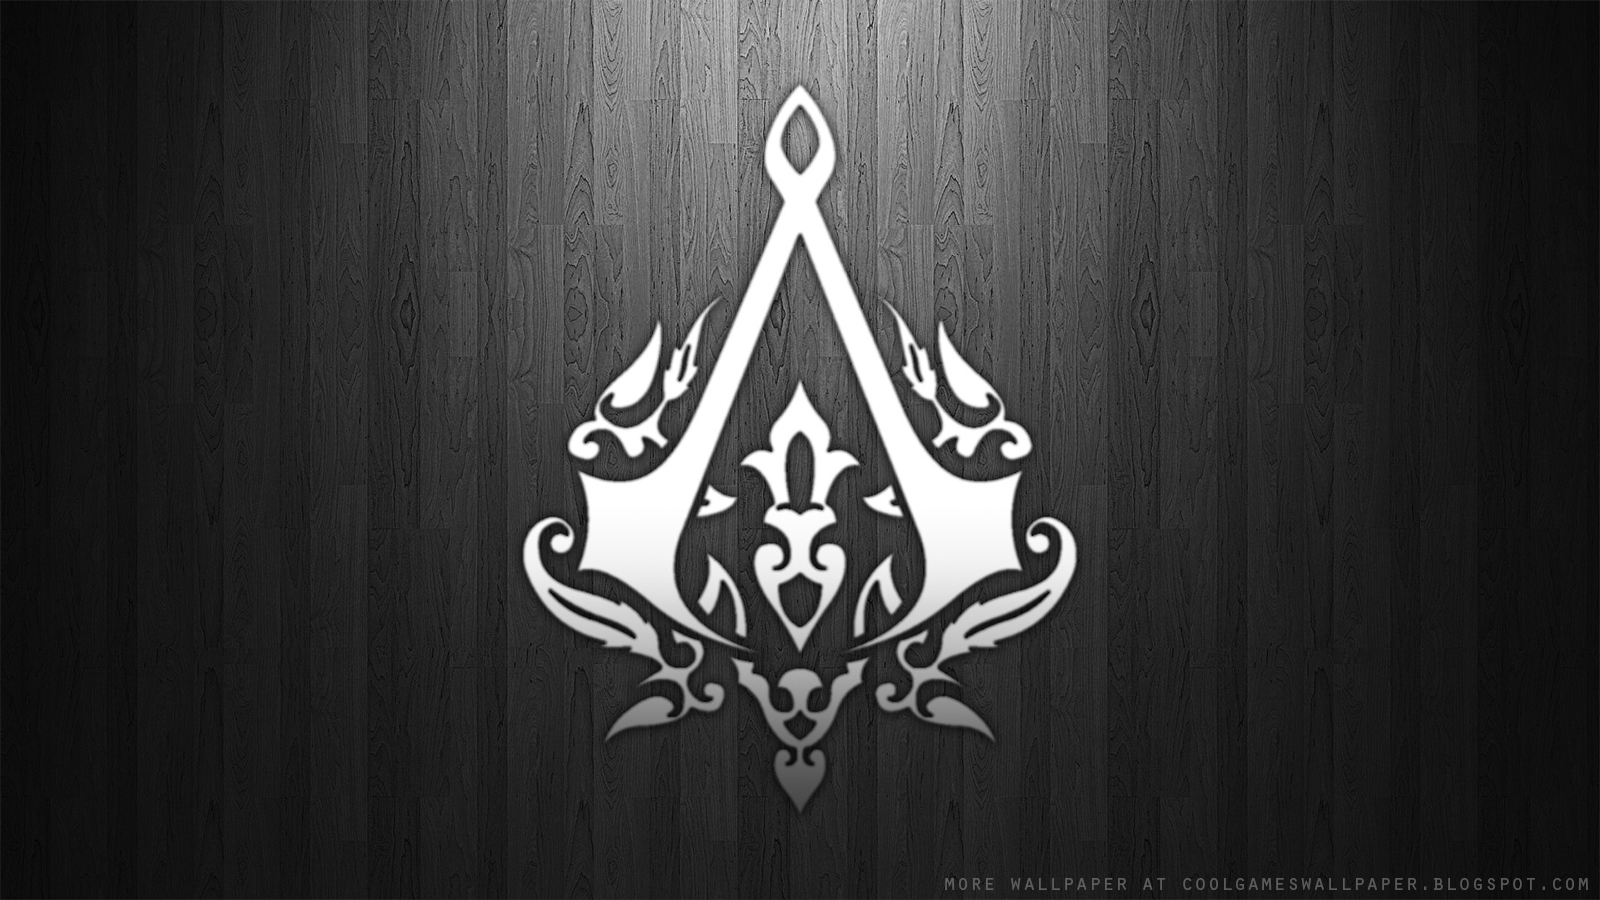 Assassins Creed 3 Logo Wallpaper   Cool Games Wallpaper 1600x900